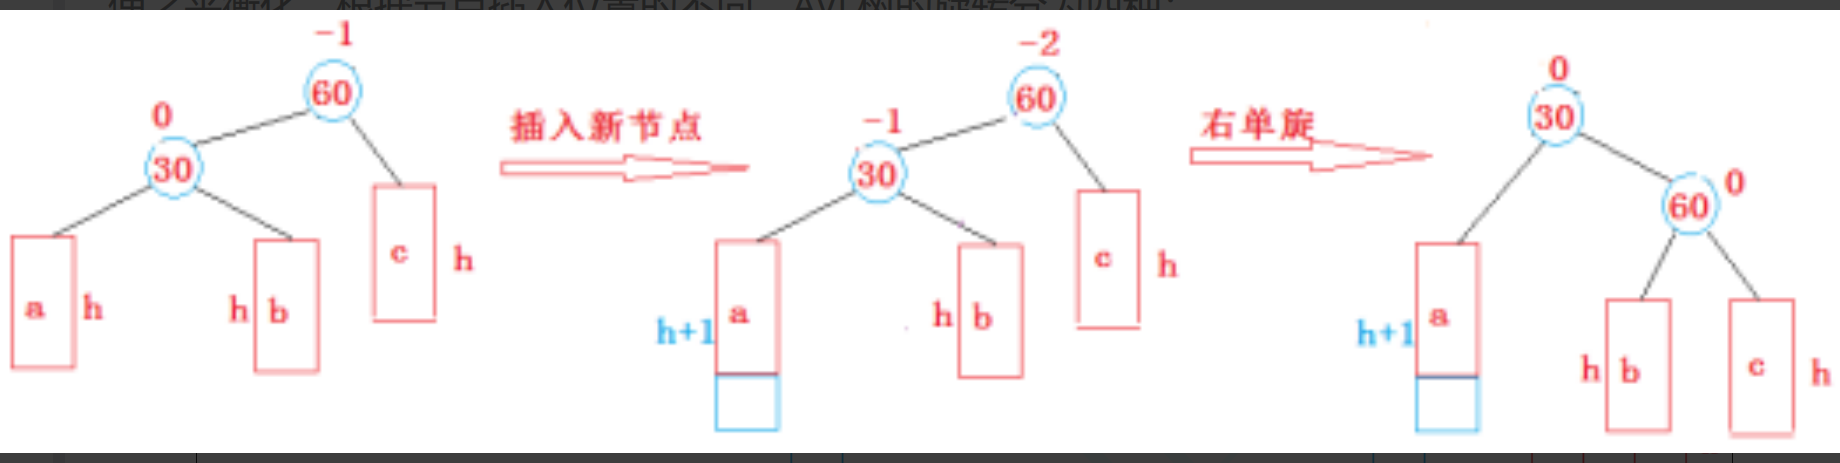 AVL树节点插入方式解析（单旋转和双旋转）_子树_21